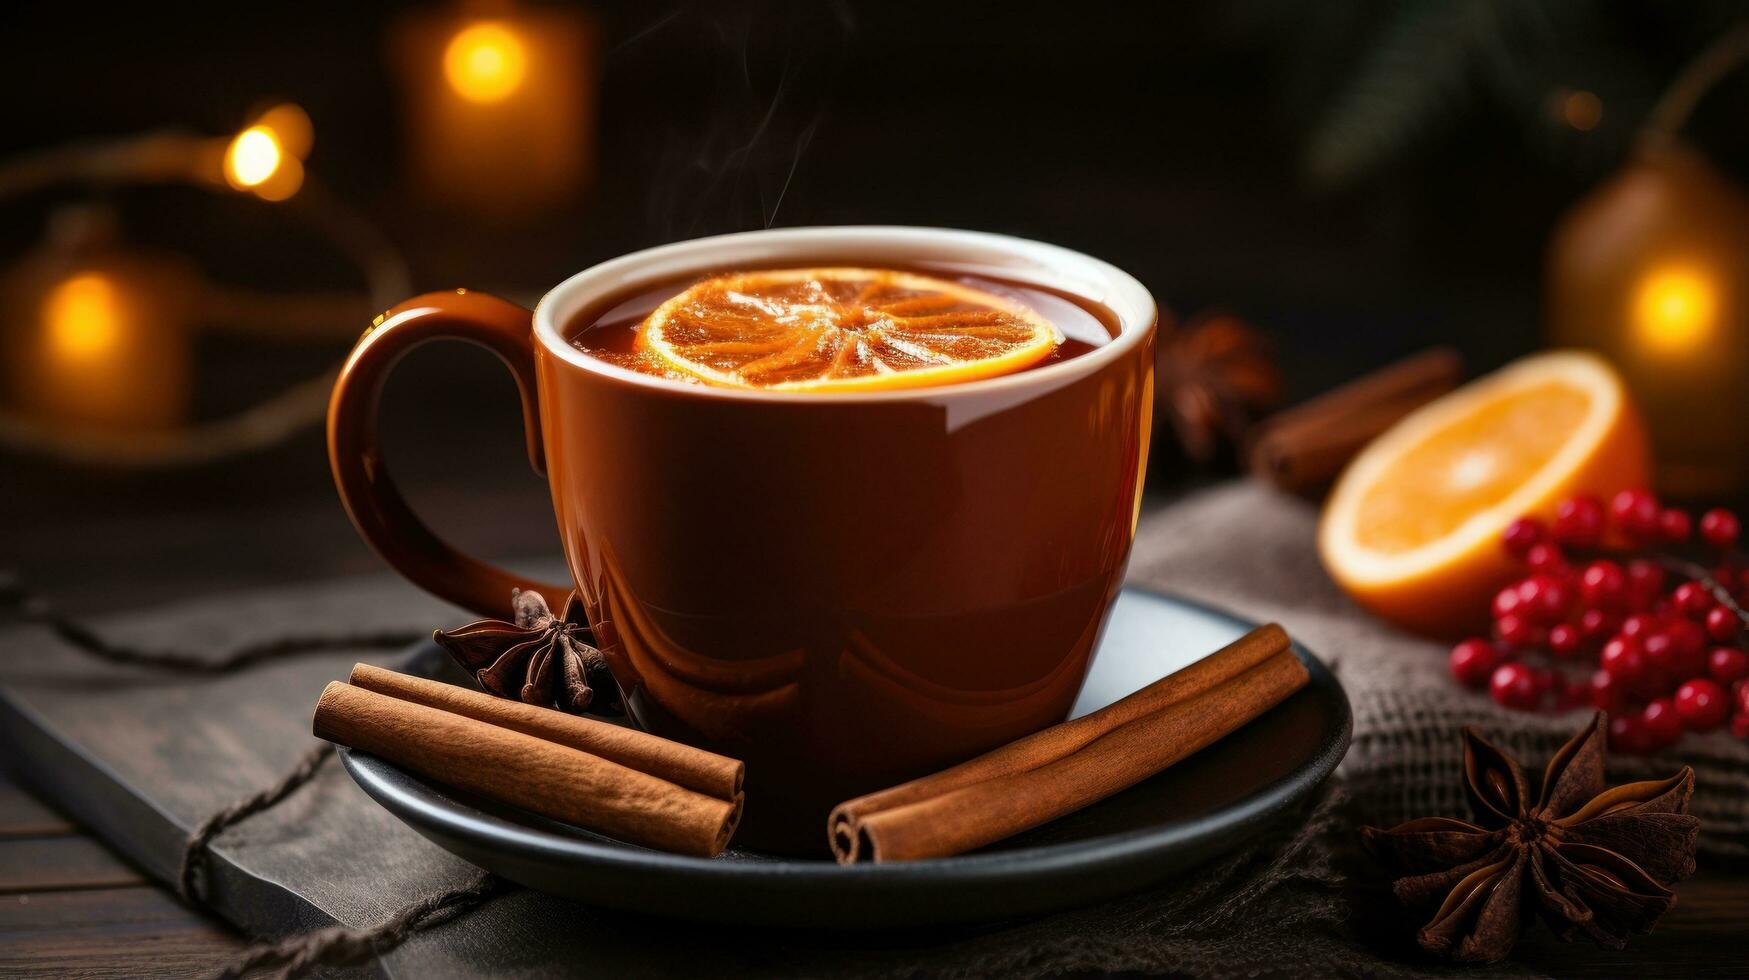 Spiced apple cider served warm in a cozy mug photo